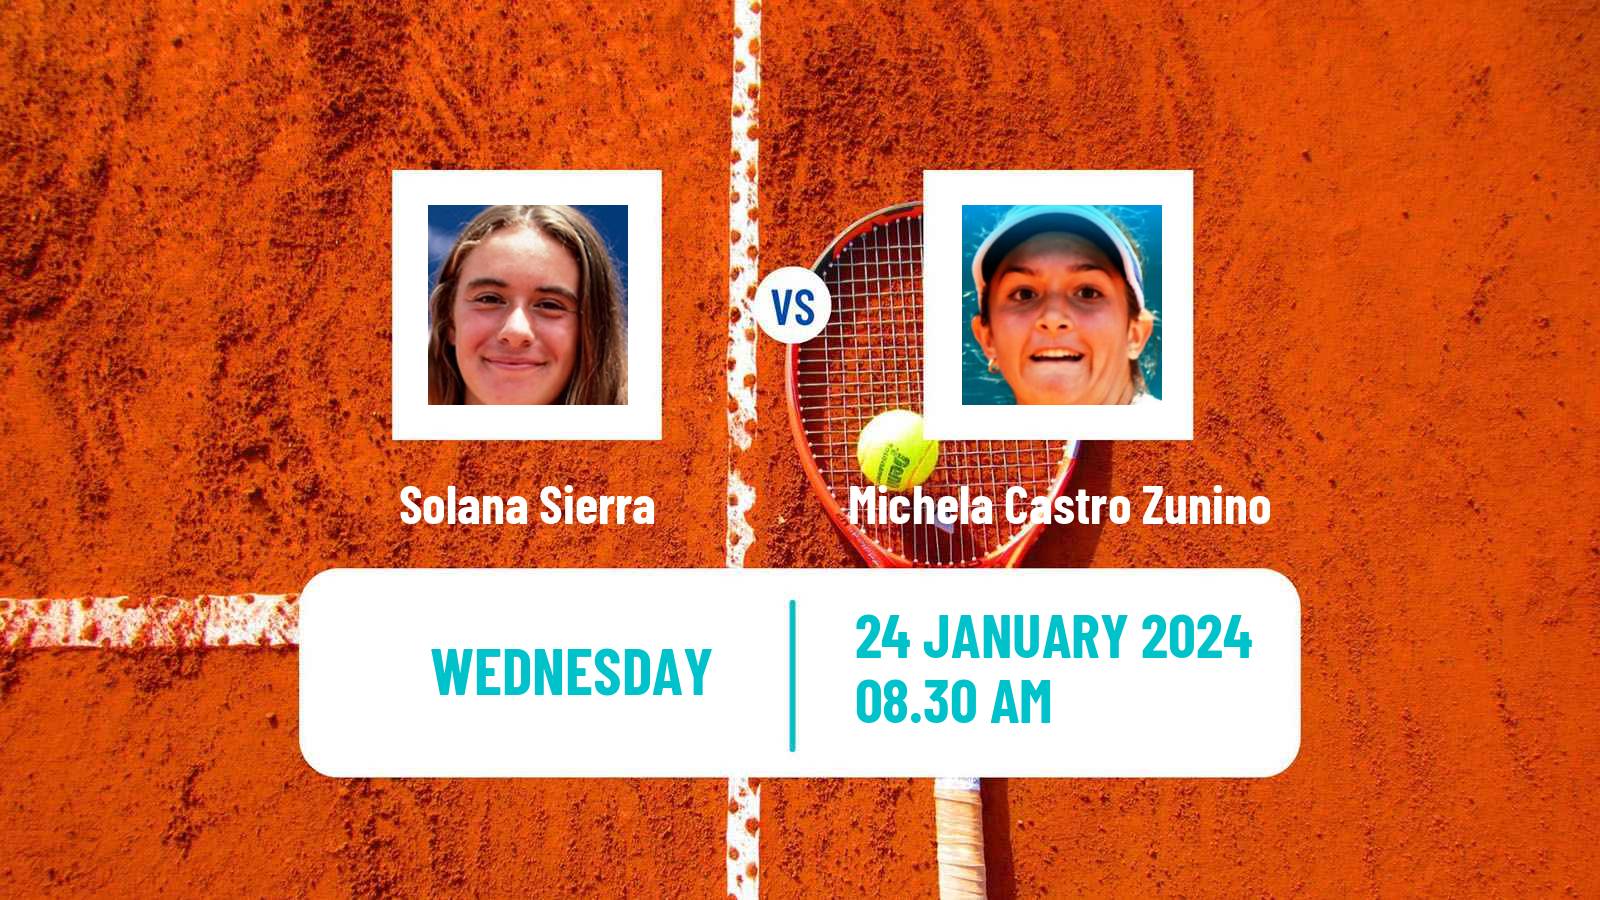 Tennis ITF W35 Buenos Aires 2 Women Solana Sierra - Michela Castro Zunino